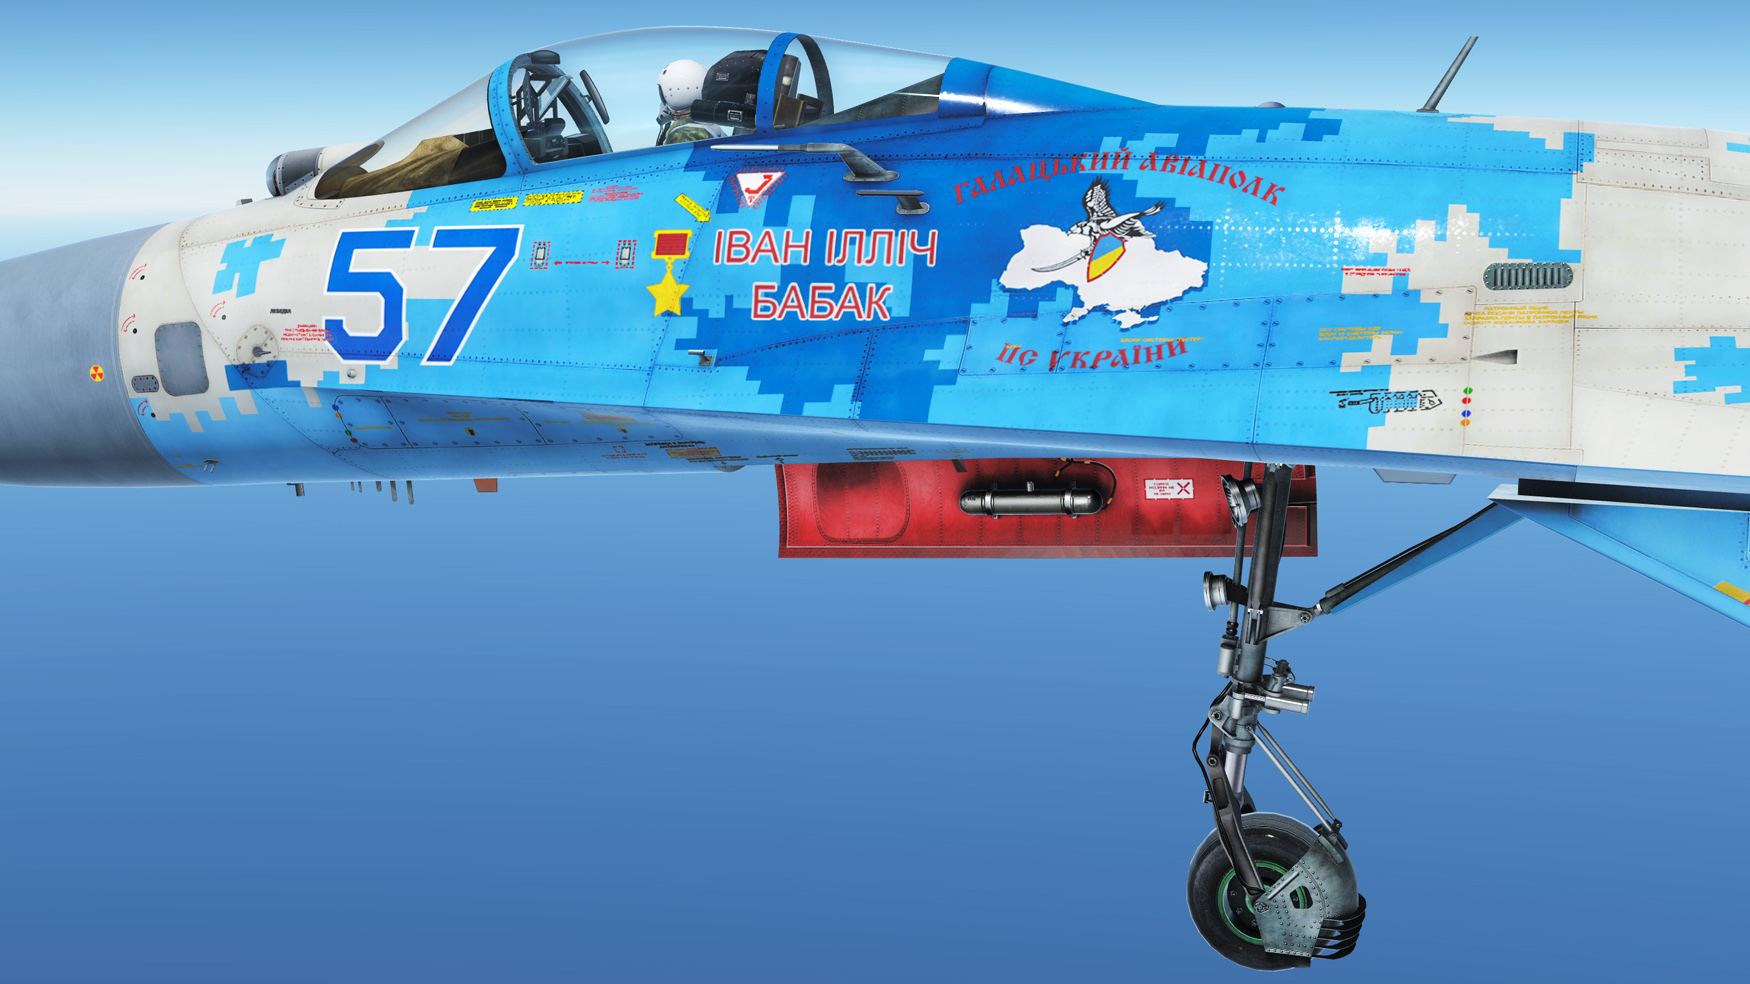 Twitter 上的 Flying Isoko ウクライナ空軍 第1戦闘航空連隊 青の57 第二次大戦の英雄パイロットであるイヴァン ババクの名が付けられた機体 イヴァンは1943年のドイツ空軍機との戦闘 の功績を讃えられ ソ連邦英雄勲章を与えられました 本機には勲章と共に名前が記